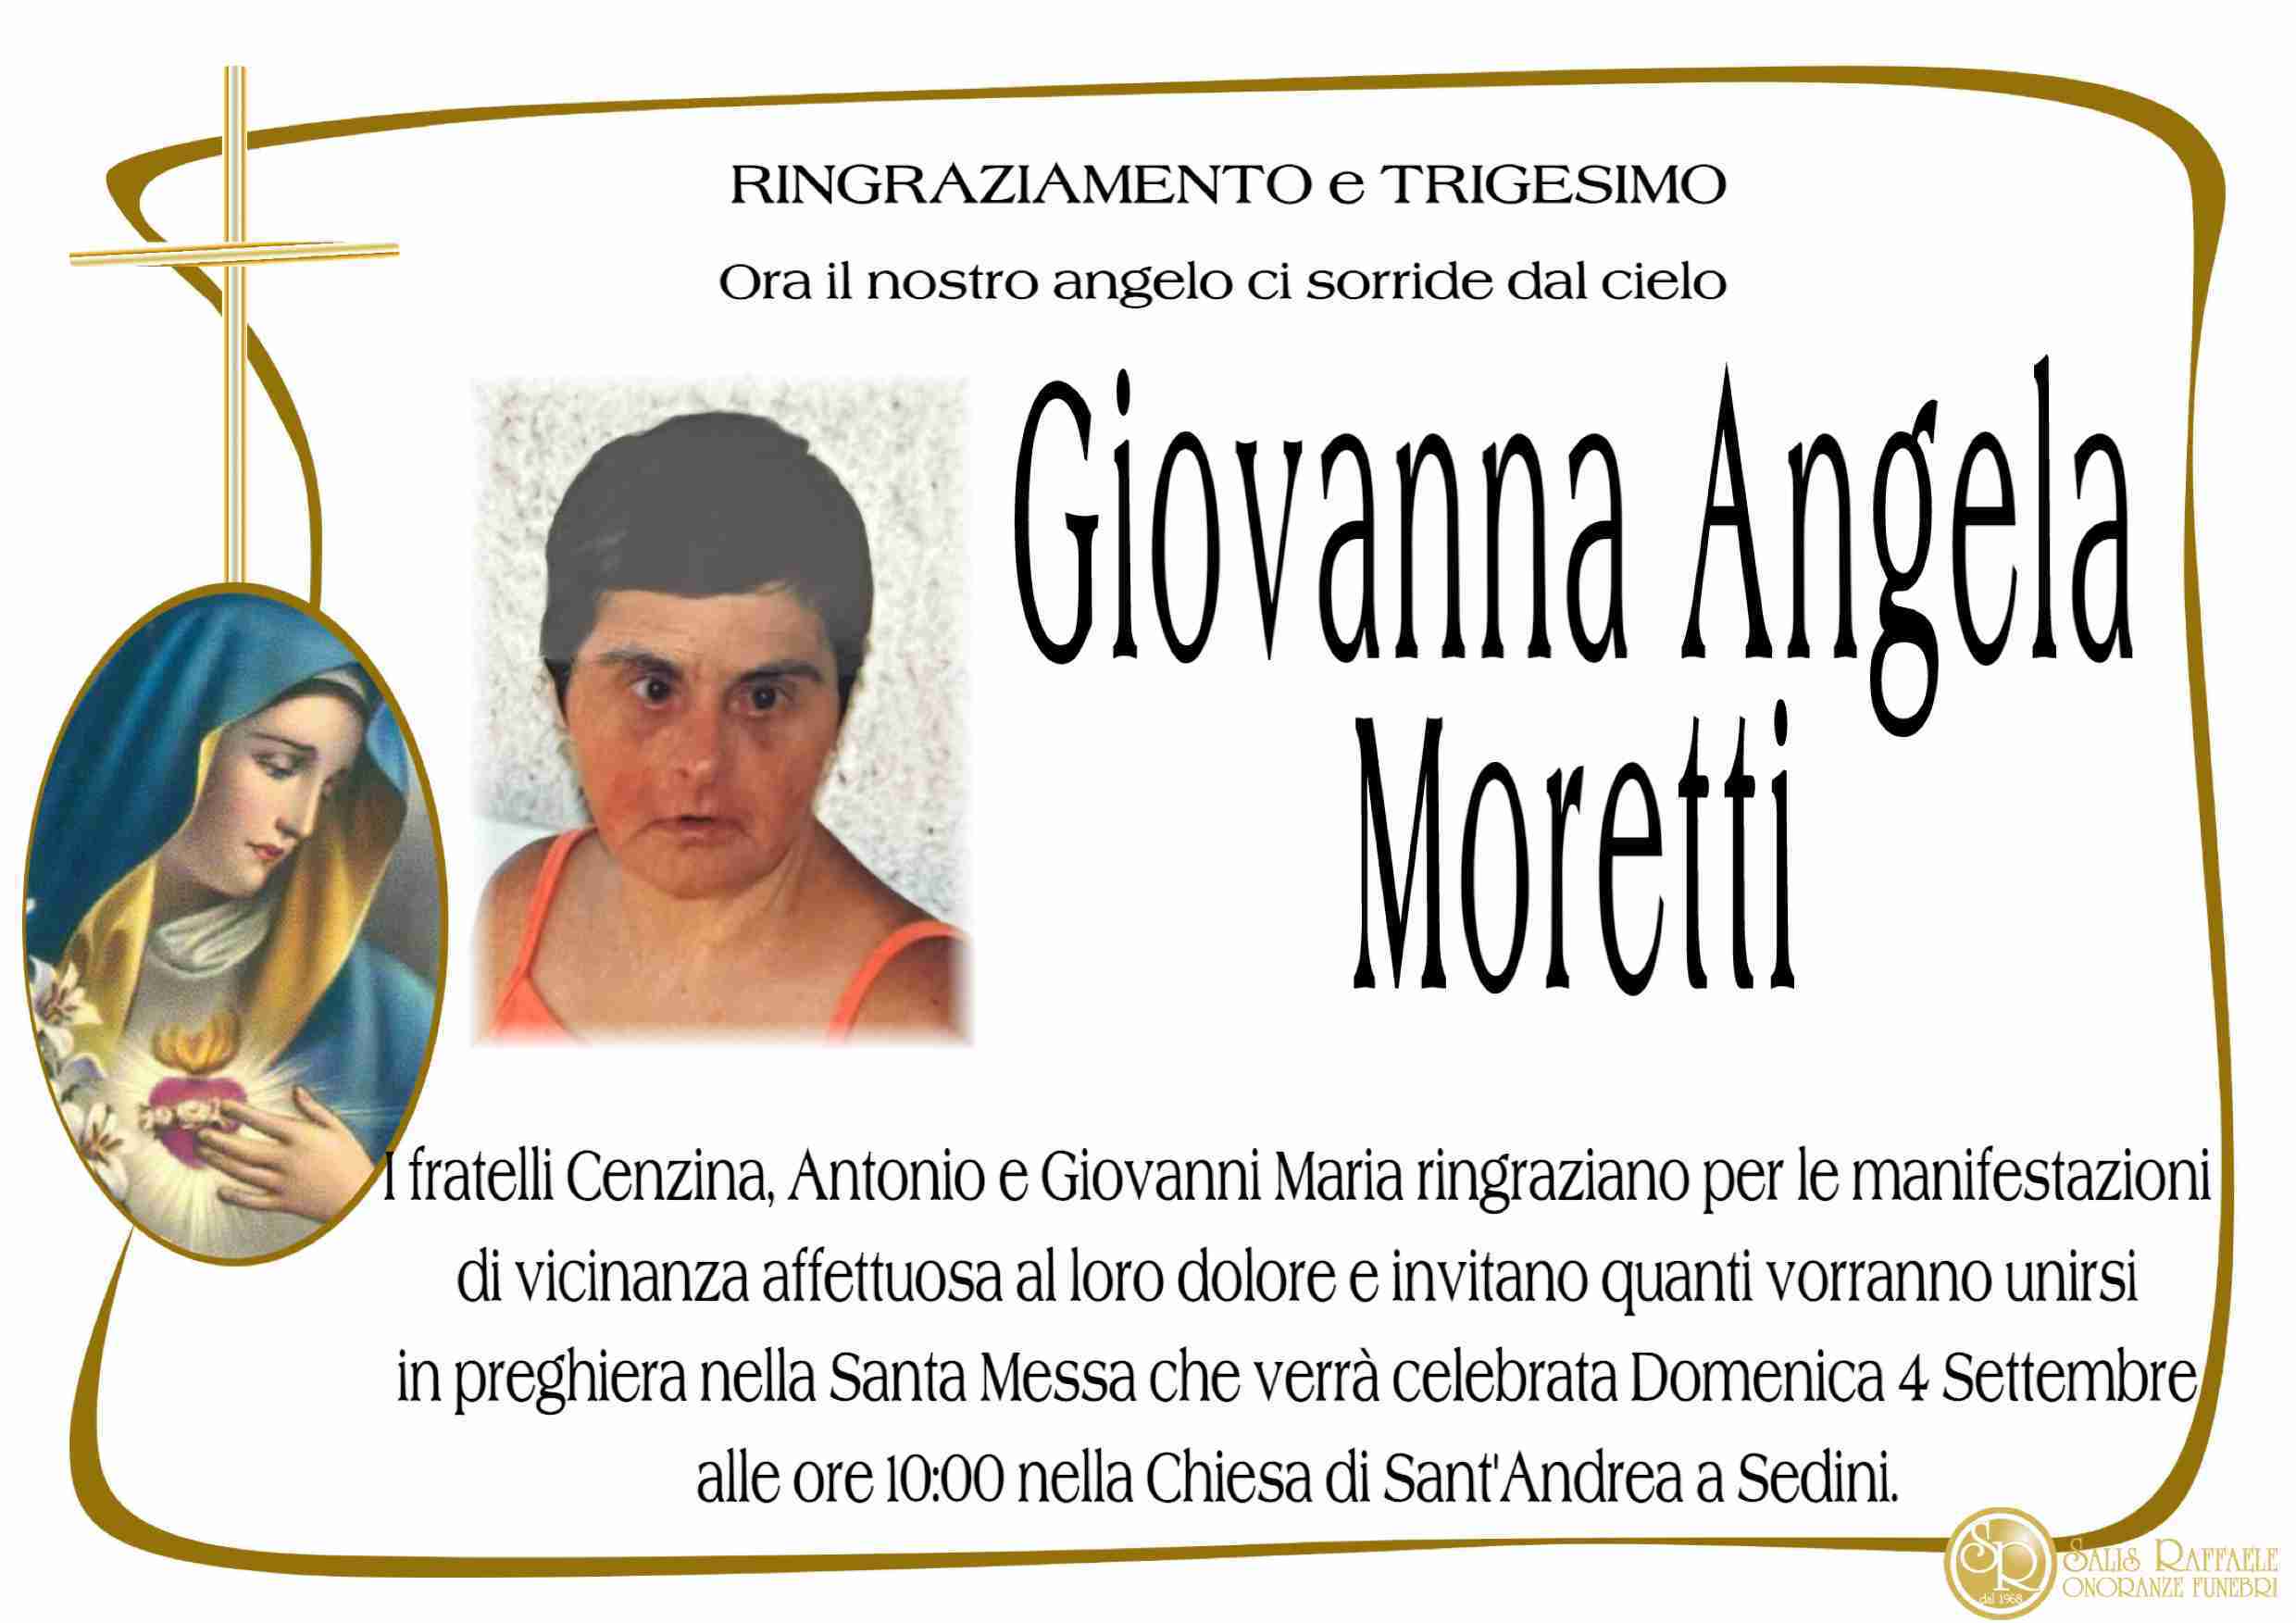 Giovanna Angela Moretti